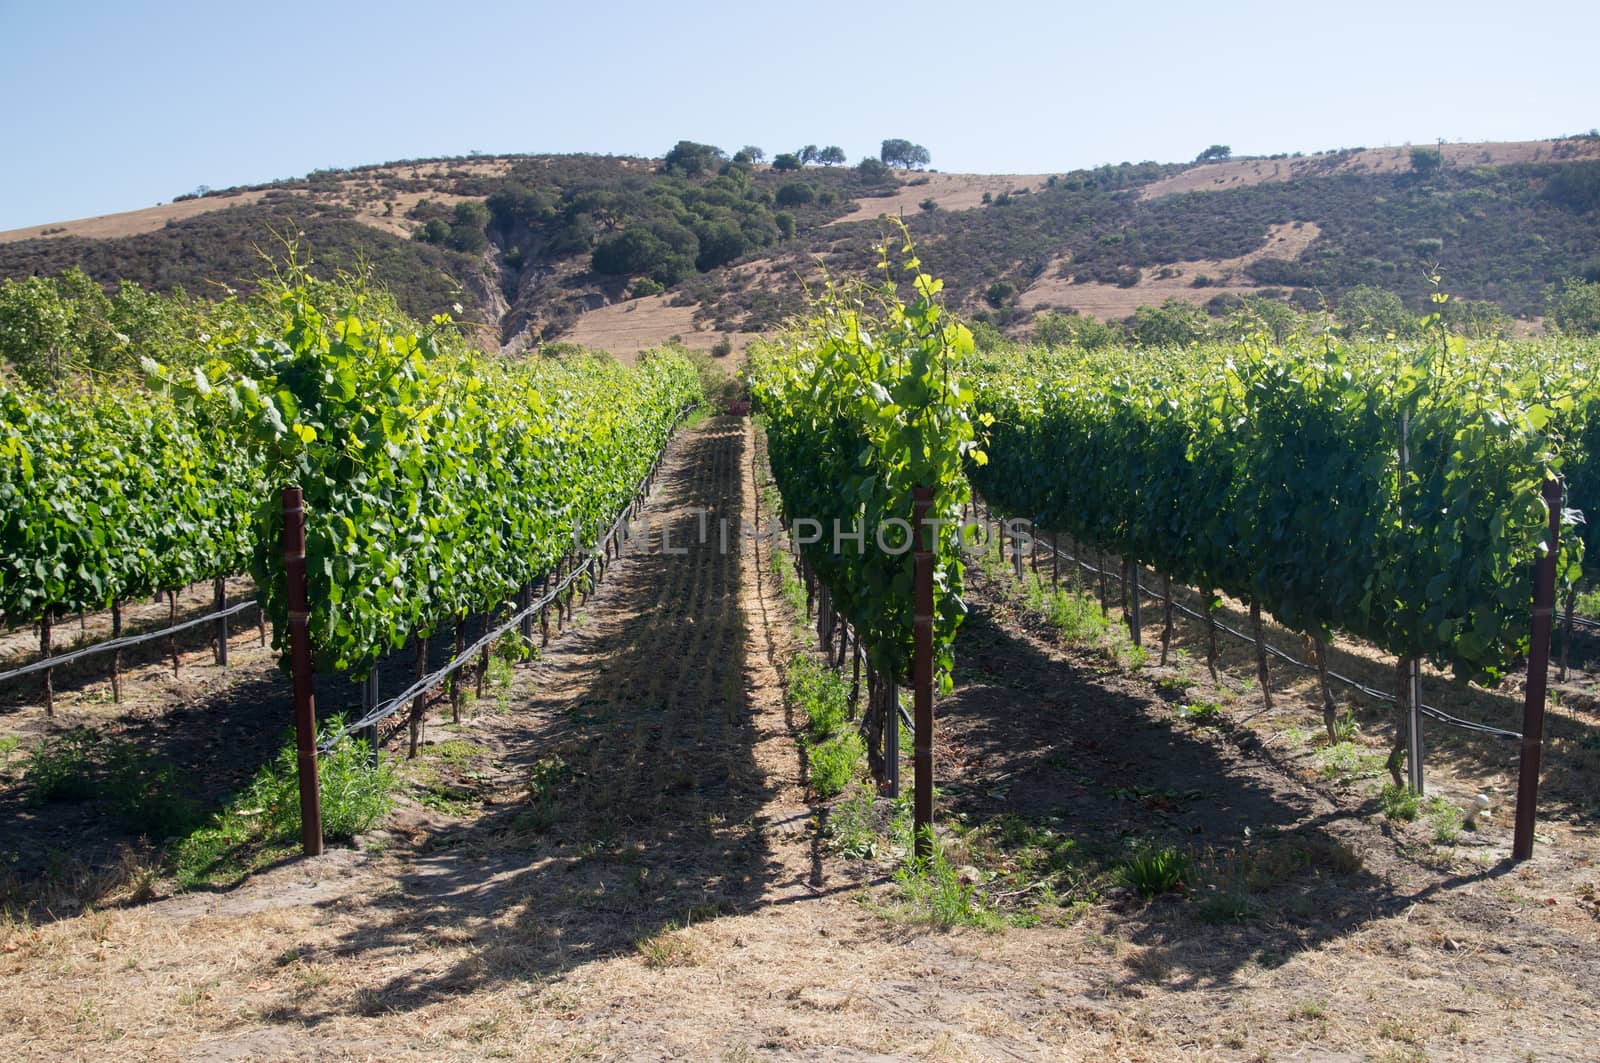 Grapevines under hot Summer sun in California by emattil